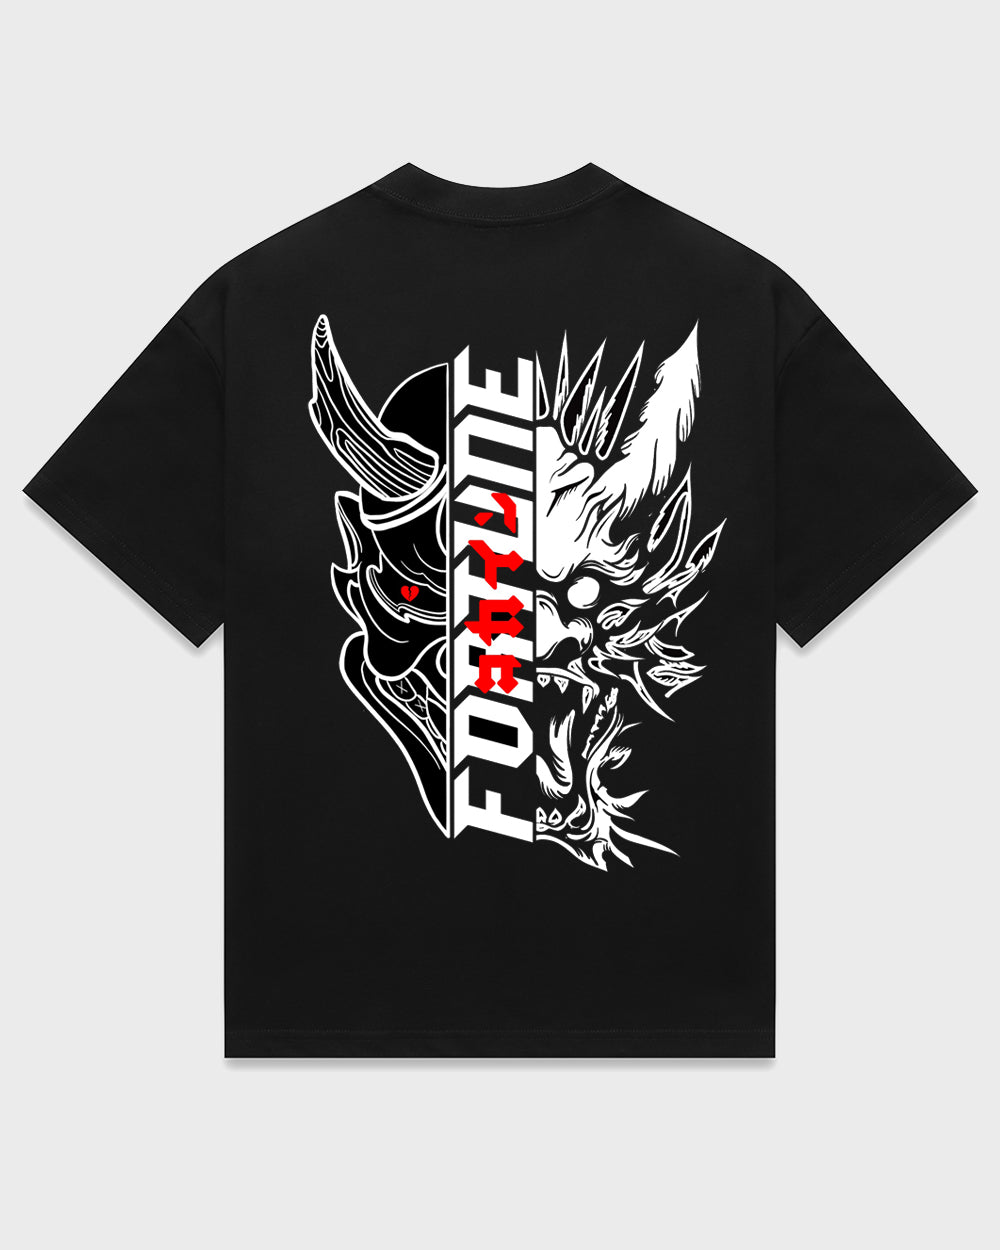 Fortune Gxng x KOKAINE "Collab" T Shirt // Black